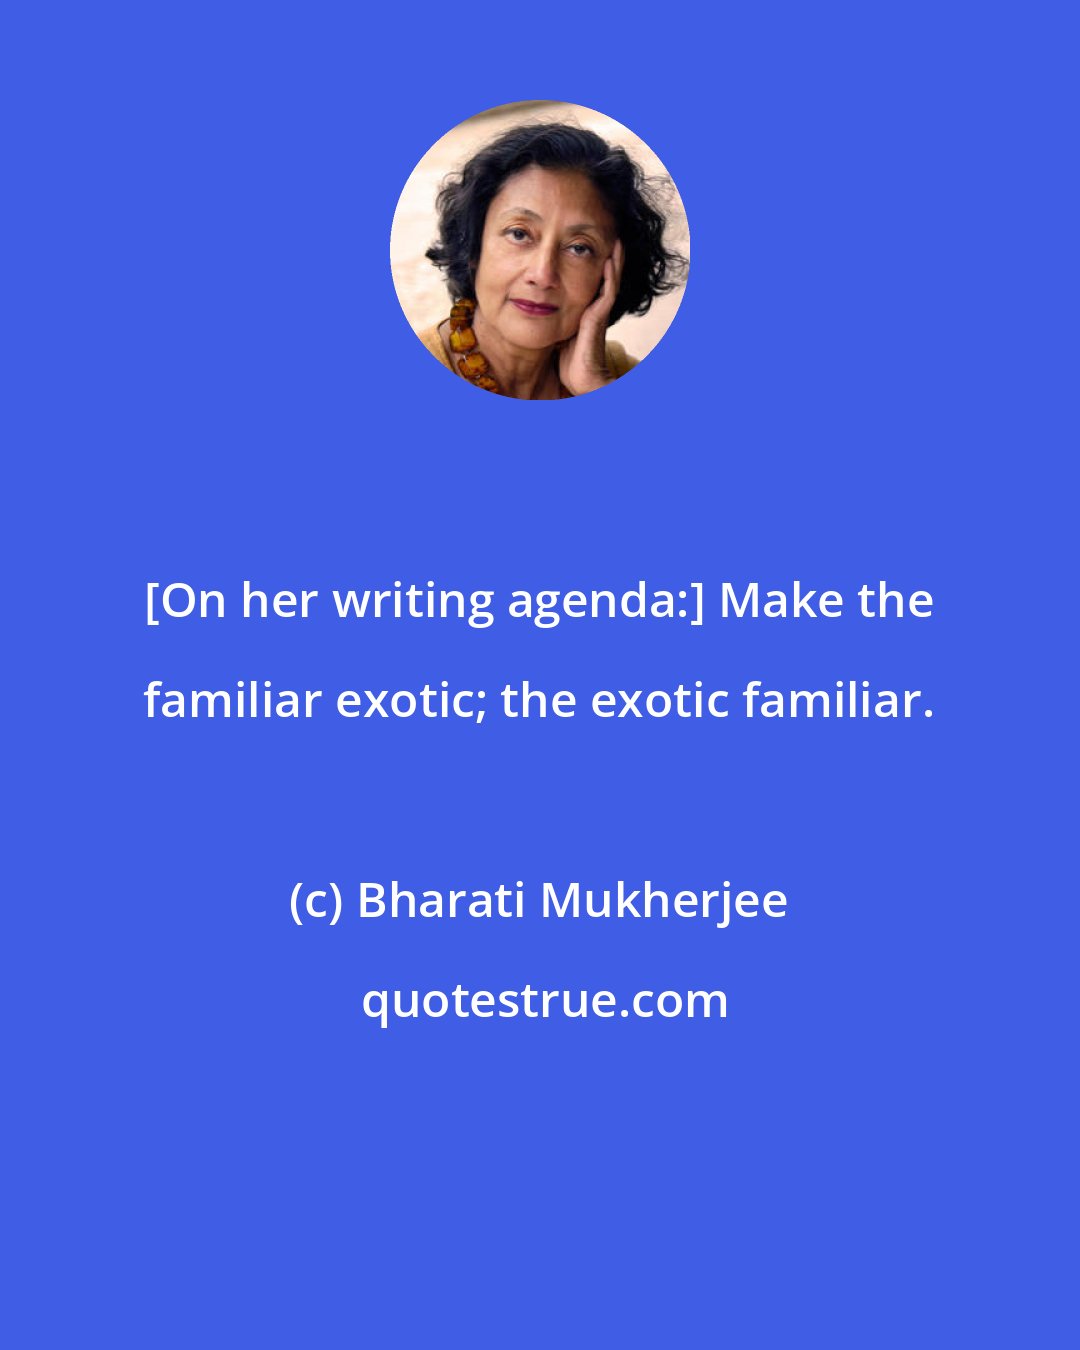 Bharati Mukherjee: [On her writing agenda:] Make the familiar exotic; the exotic familiar.